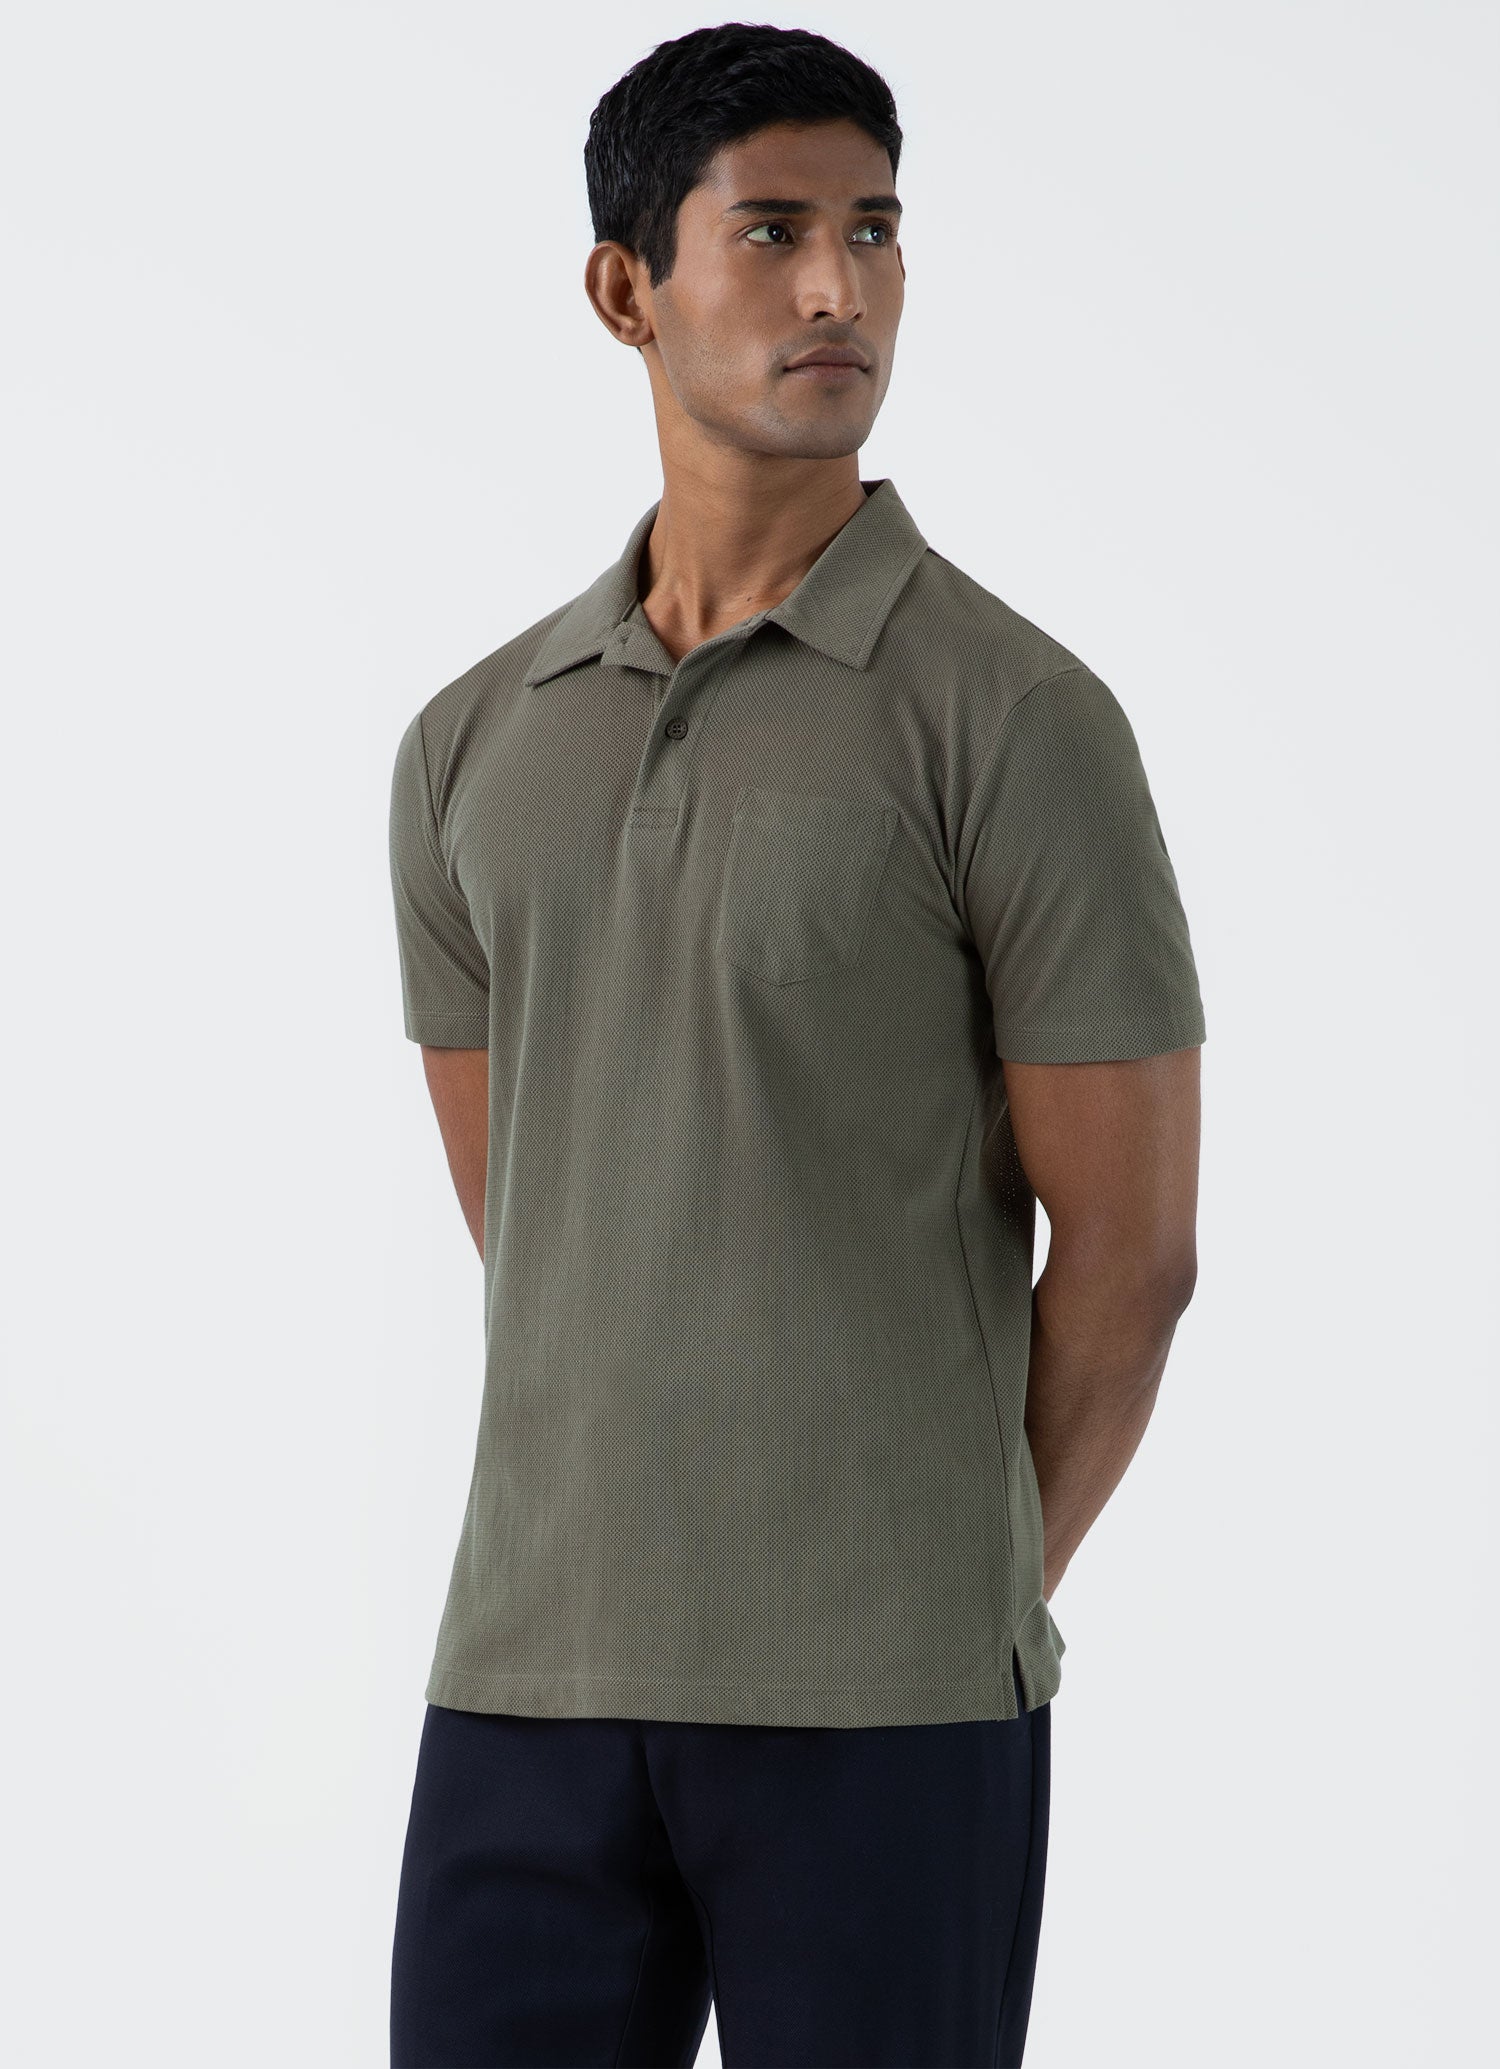 Men's Riviera Polo Shirt in Khaki